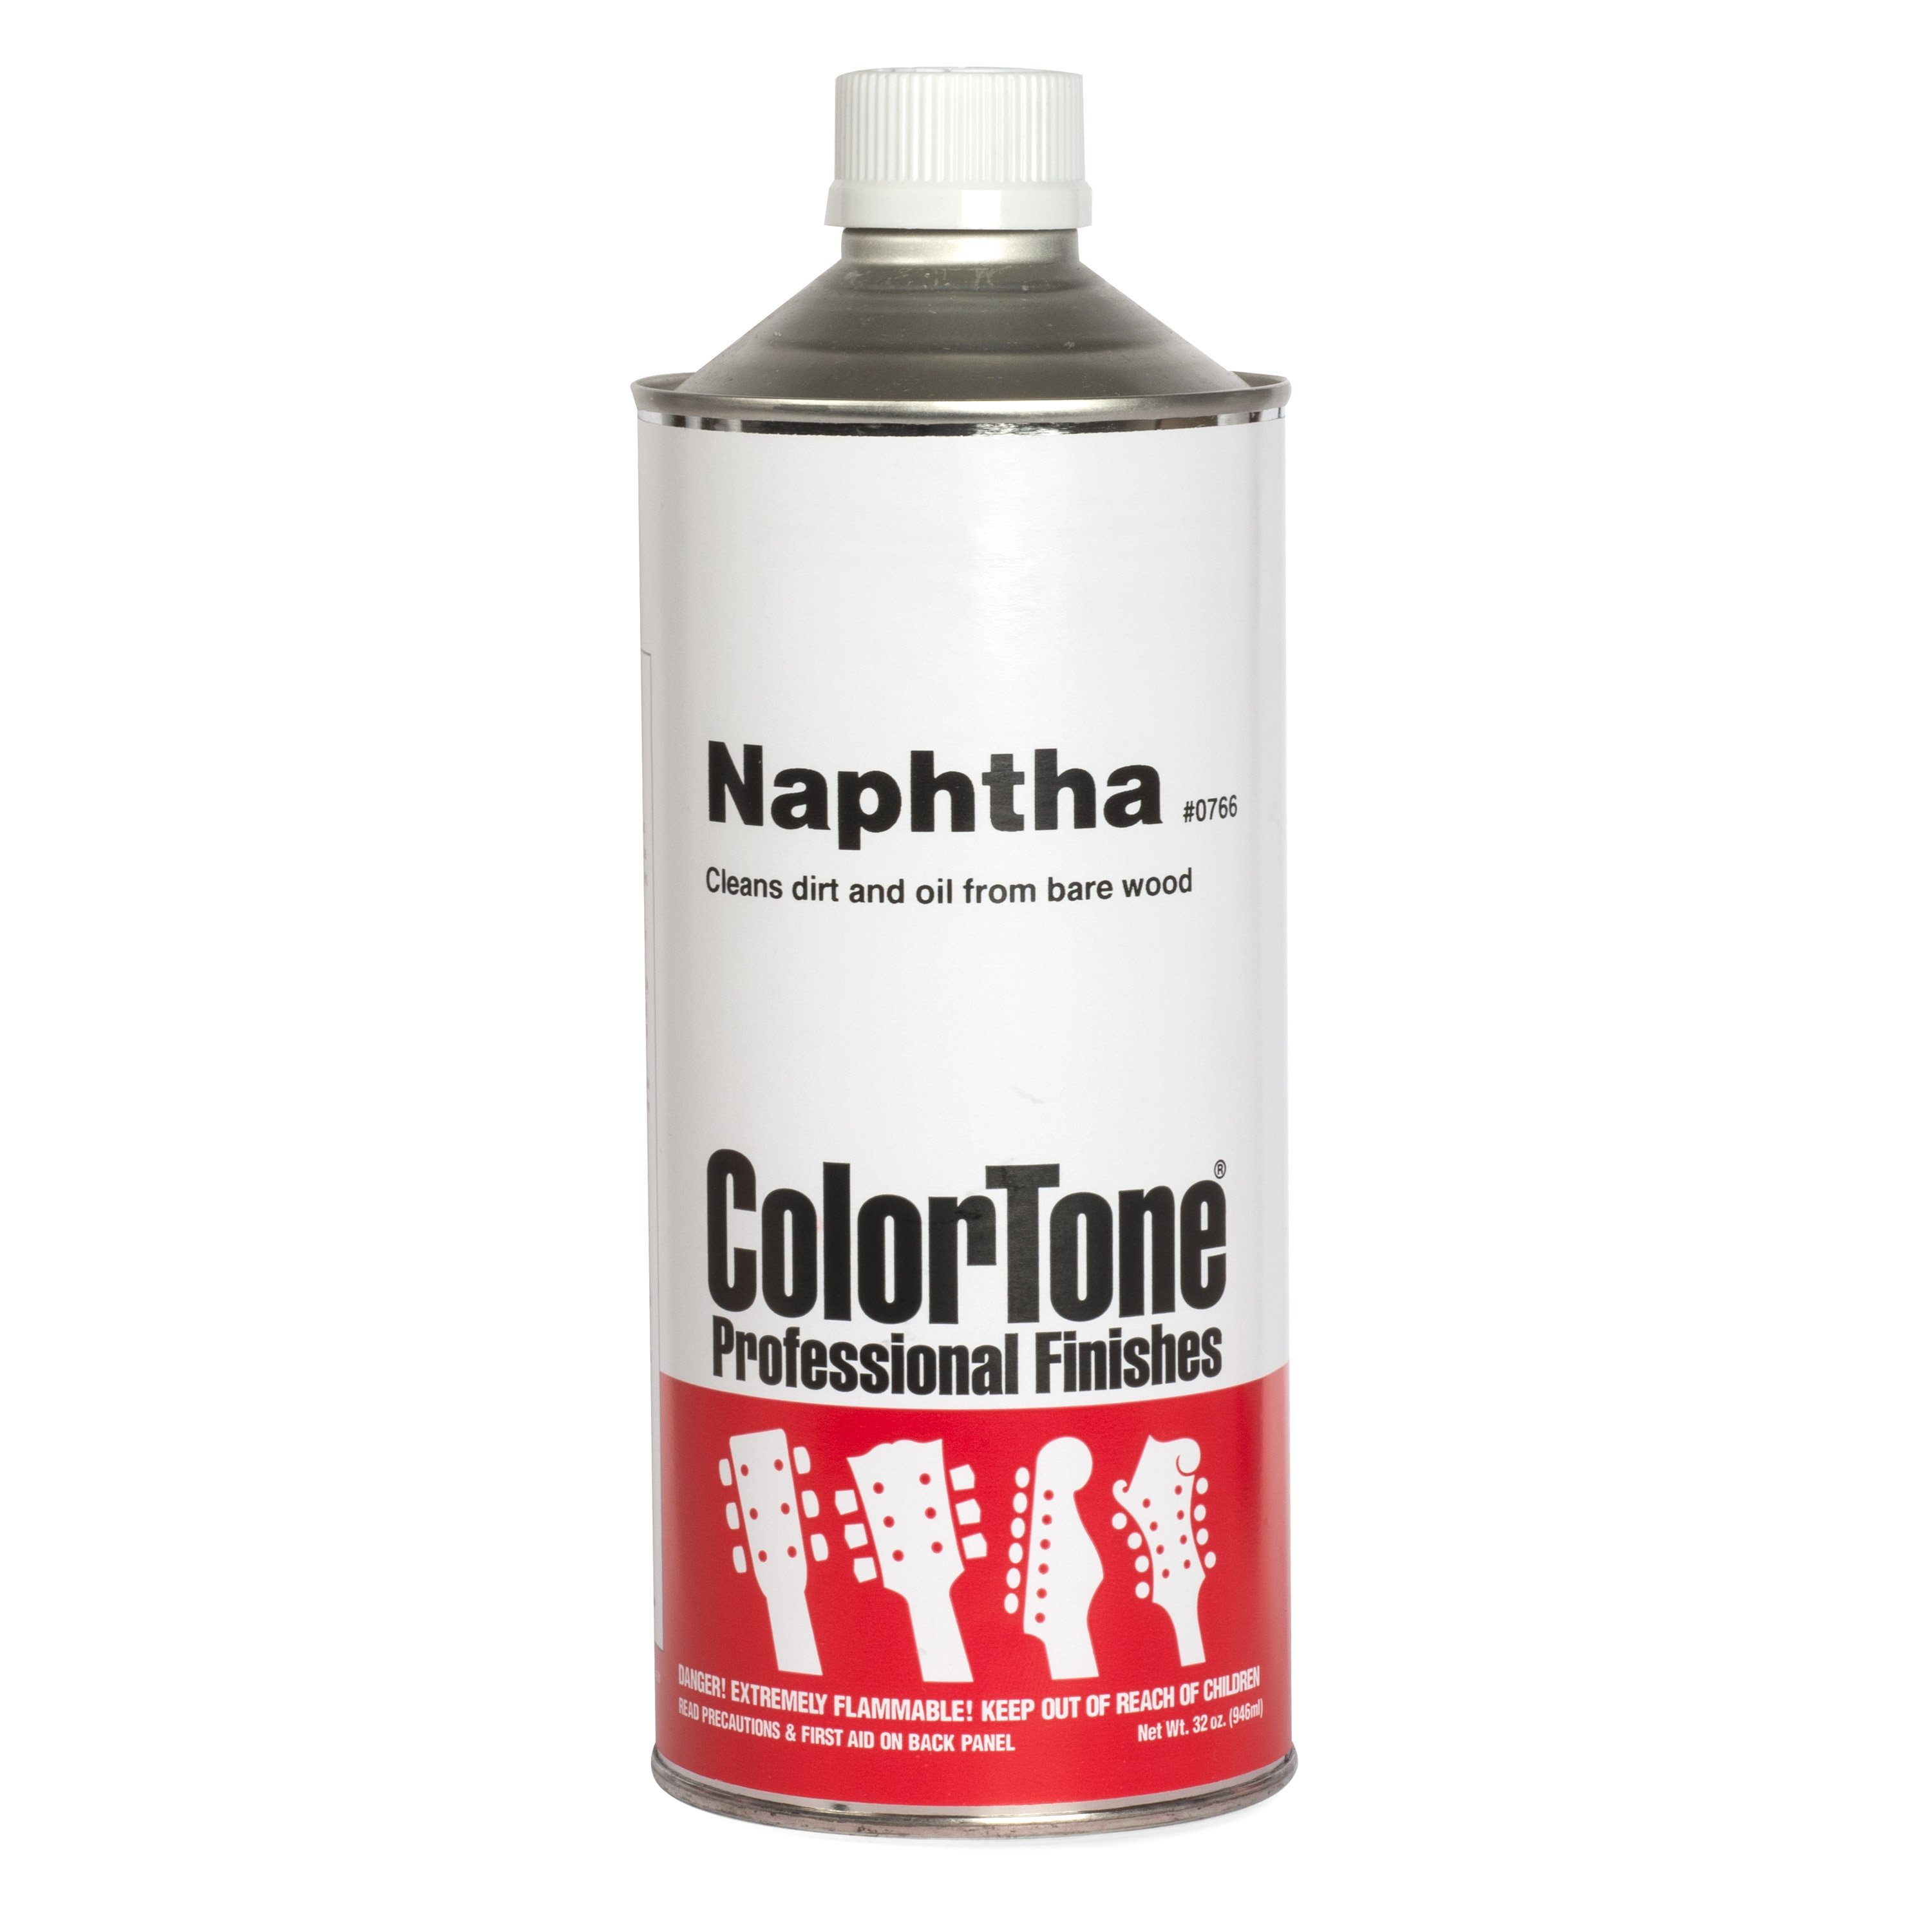 ColorTone Naphtha